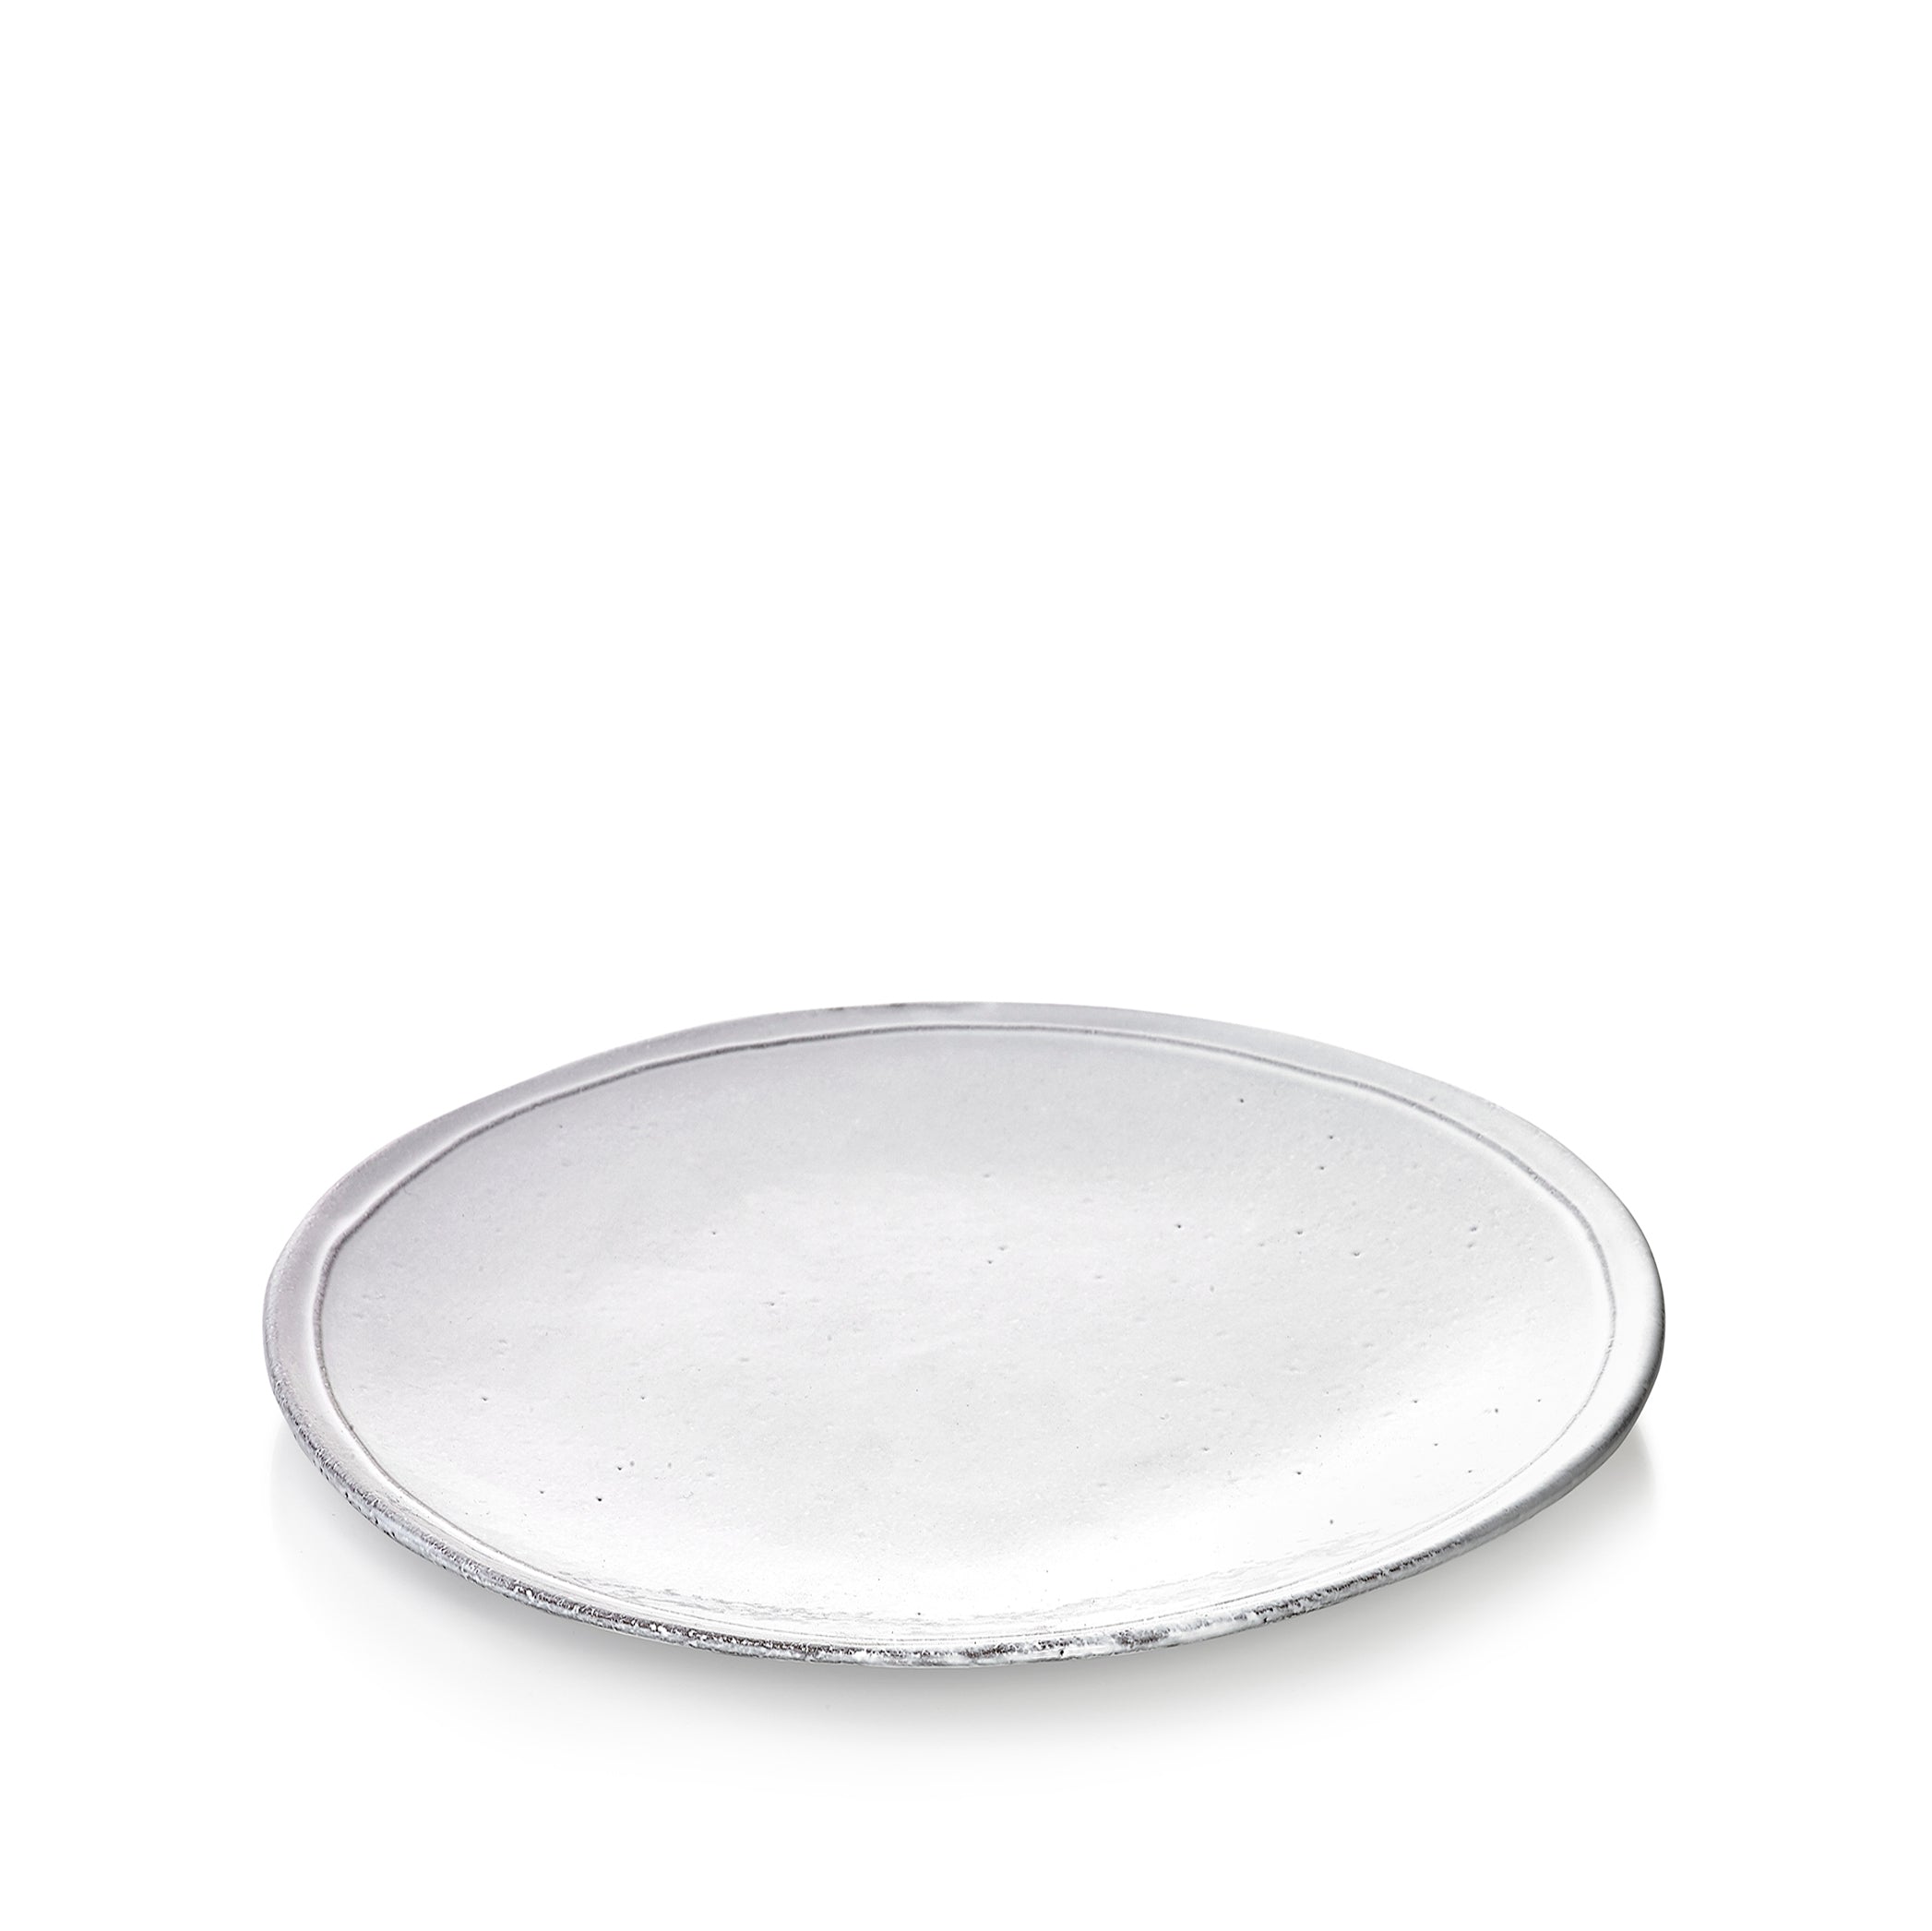 Simple Dinner Plate by Astier de Villatte, 26.5cm